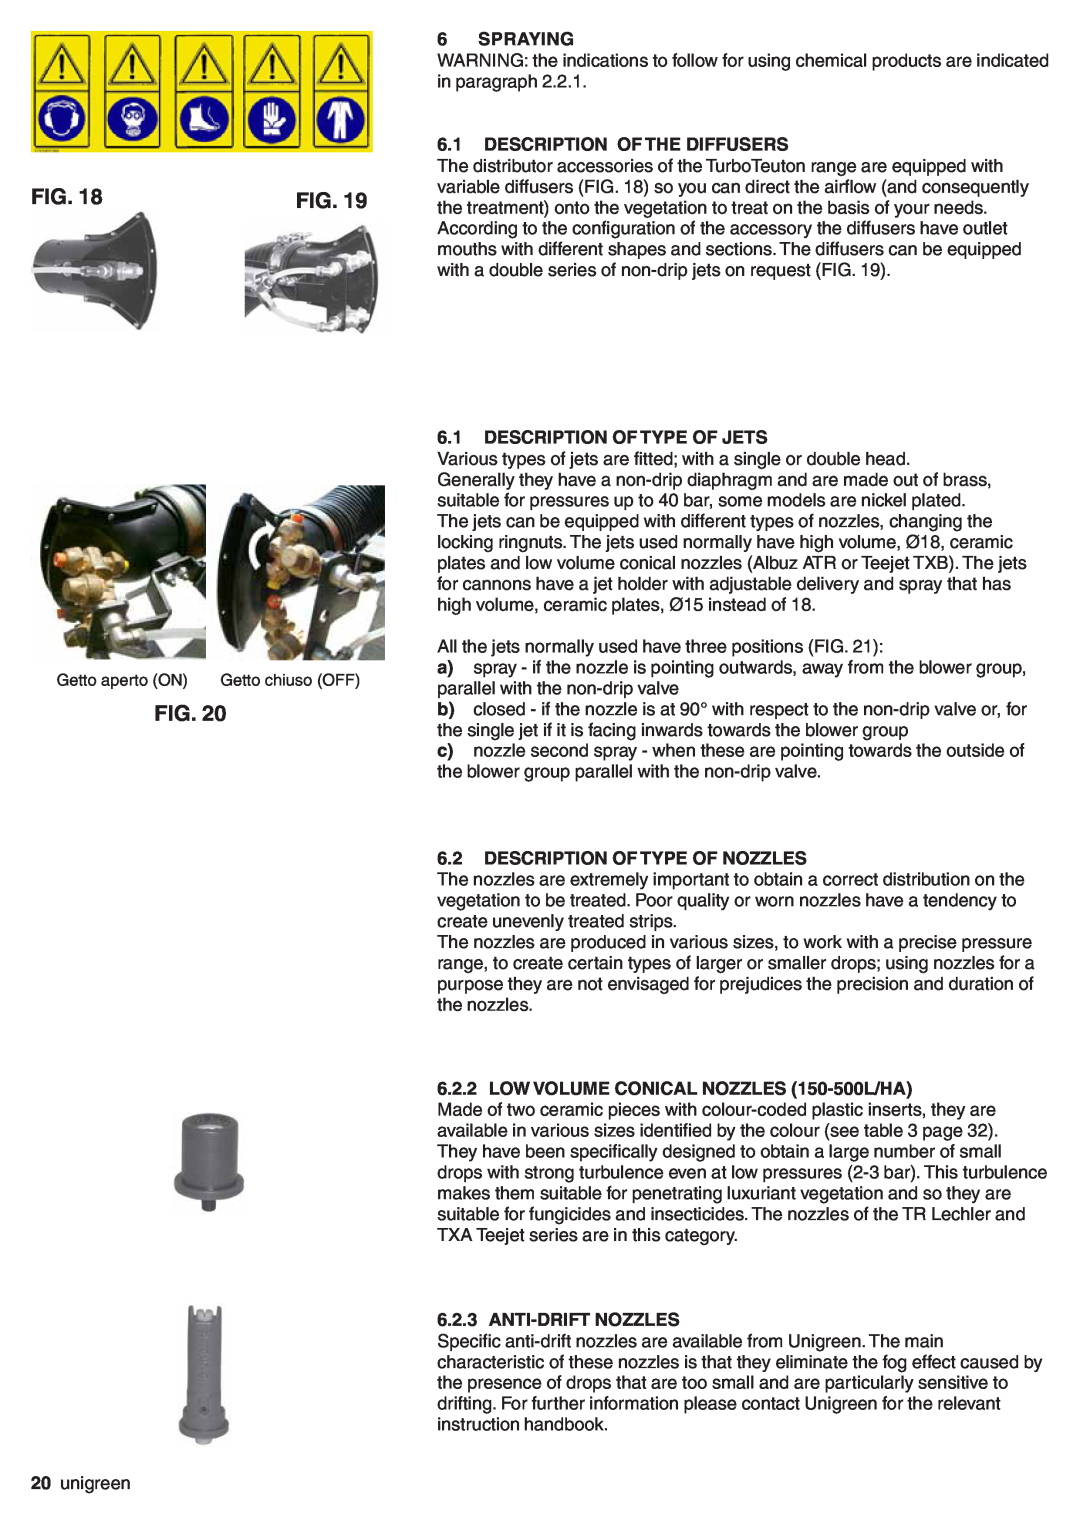 Unigreen P600, P500 Spraying, Description Of The Diffusers, Description Of Type Of Jets, Description Of Type Of Nozzles 